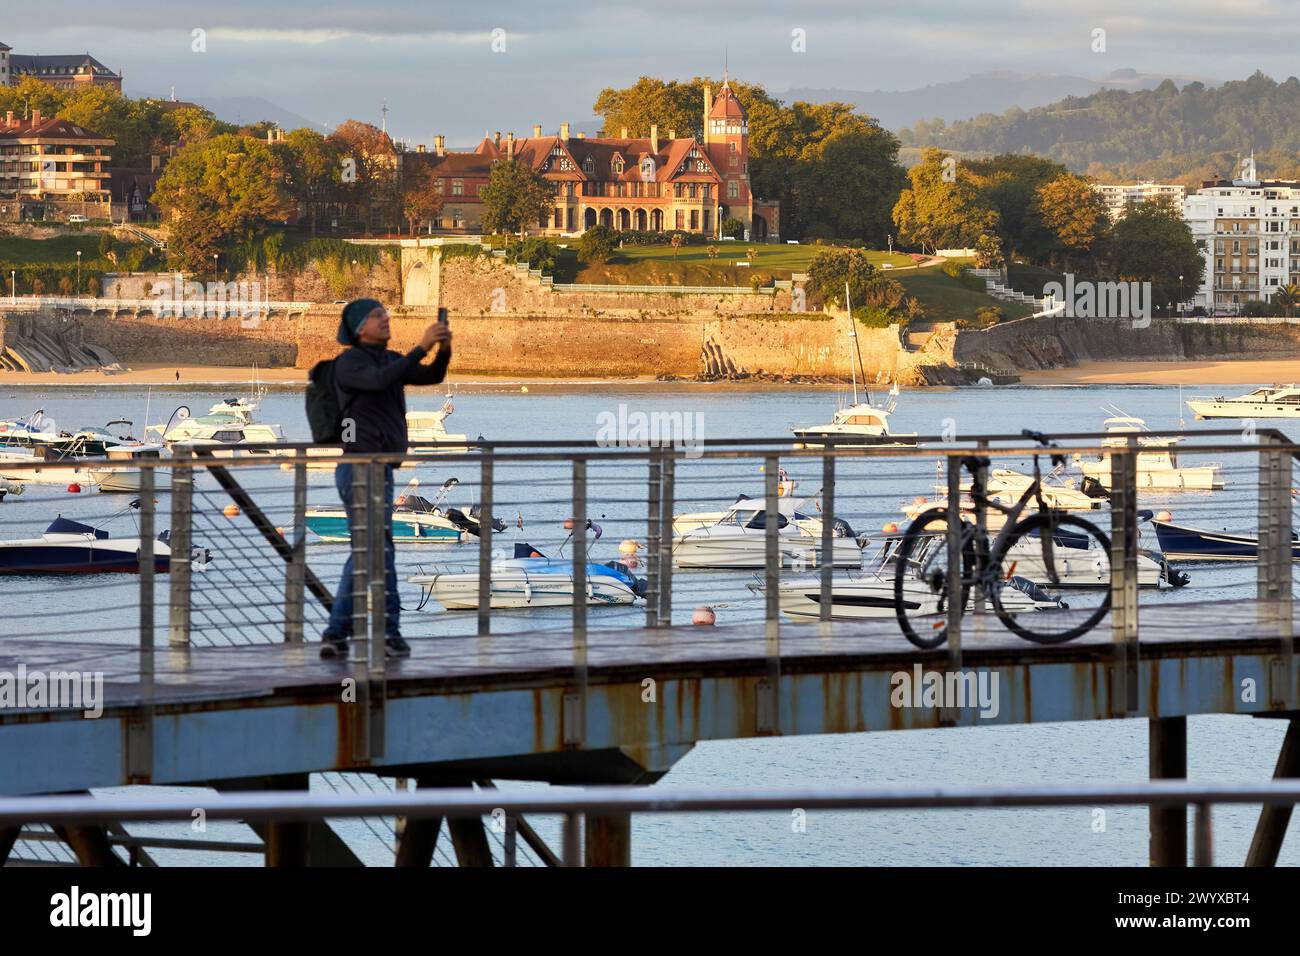 Turista con bicicleta en el embarcadero del Club Nautico, Puerto de Donostia, Bahia de La Concha, Palacio Miramar, Donostia, San Sebastian, Pais Vasco, España. Stock Photo